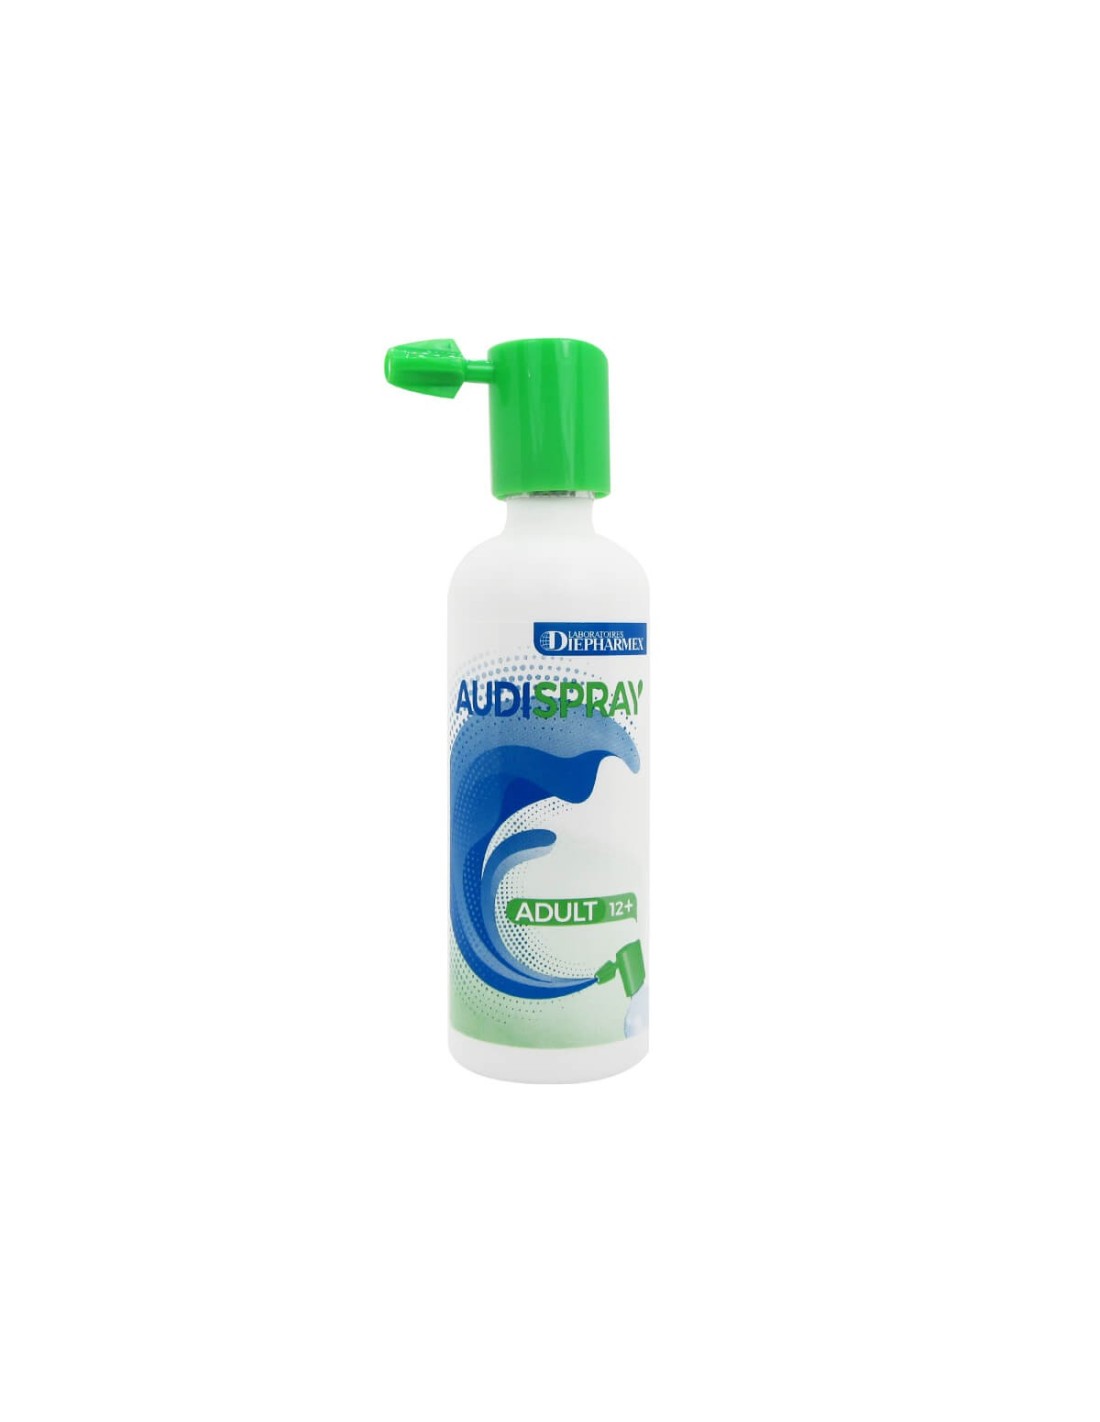 Ear hygiene Audispray 50 ml. - FARMACIA INTERNACIONAL